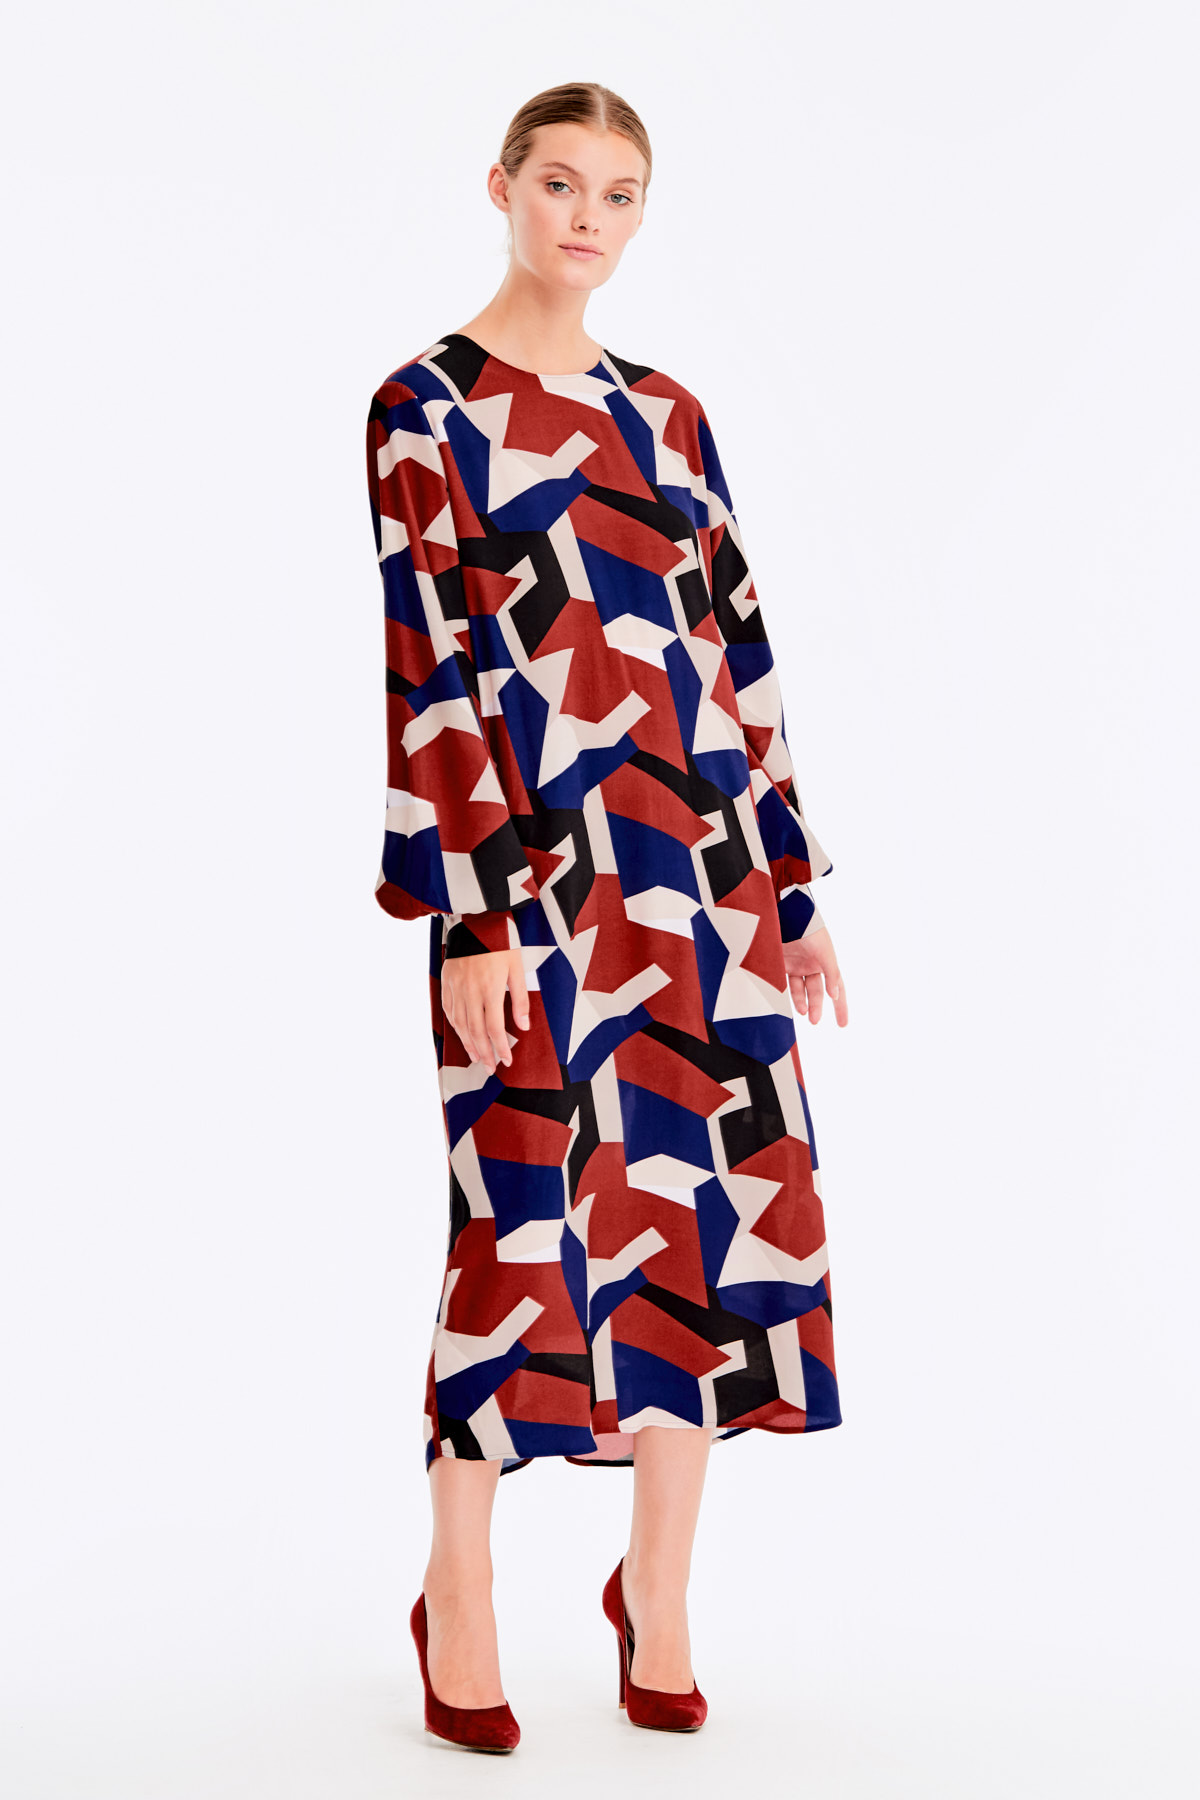 Free midi dress with variegated geometric print ¶¶, photo 10